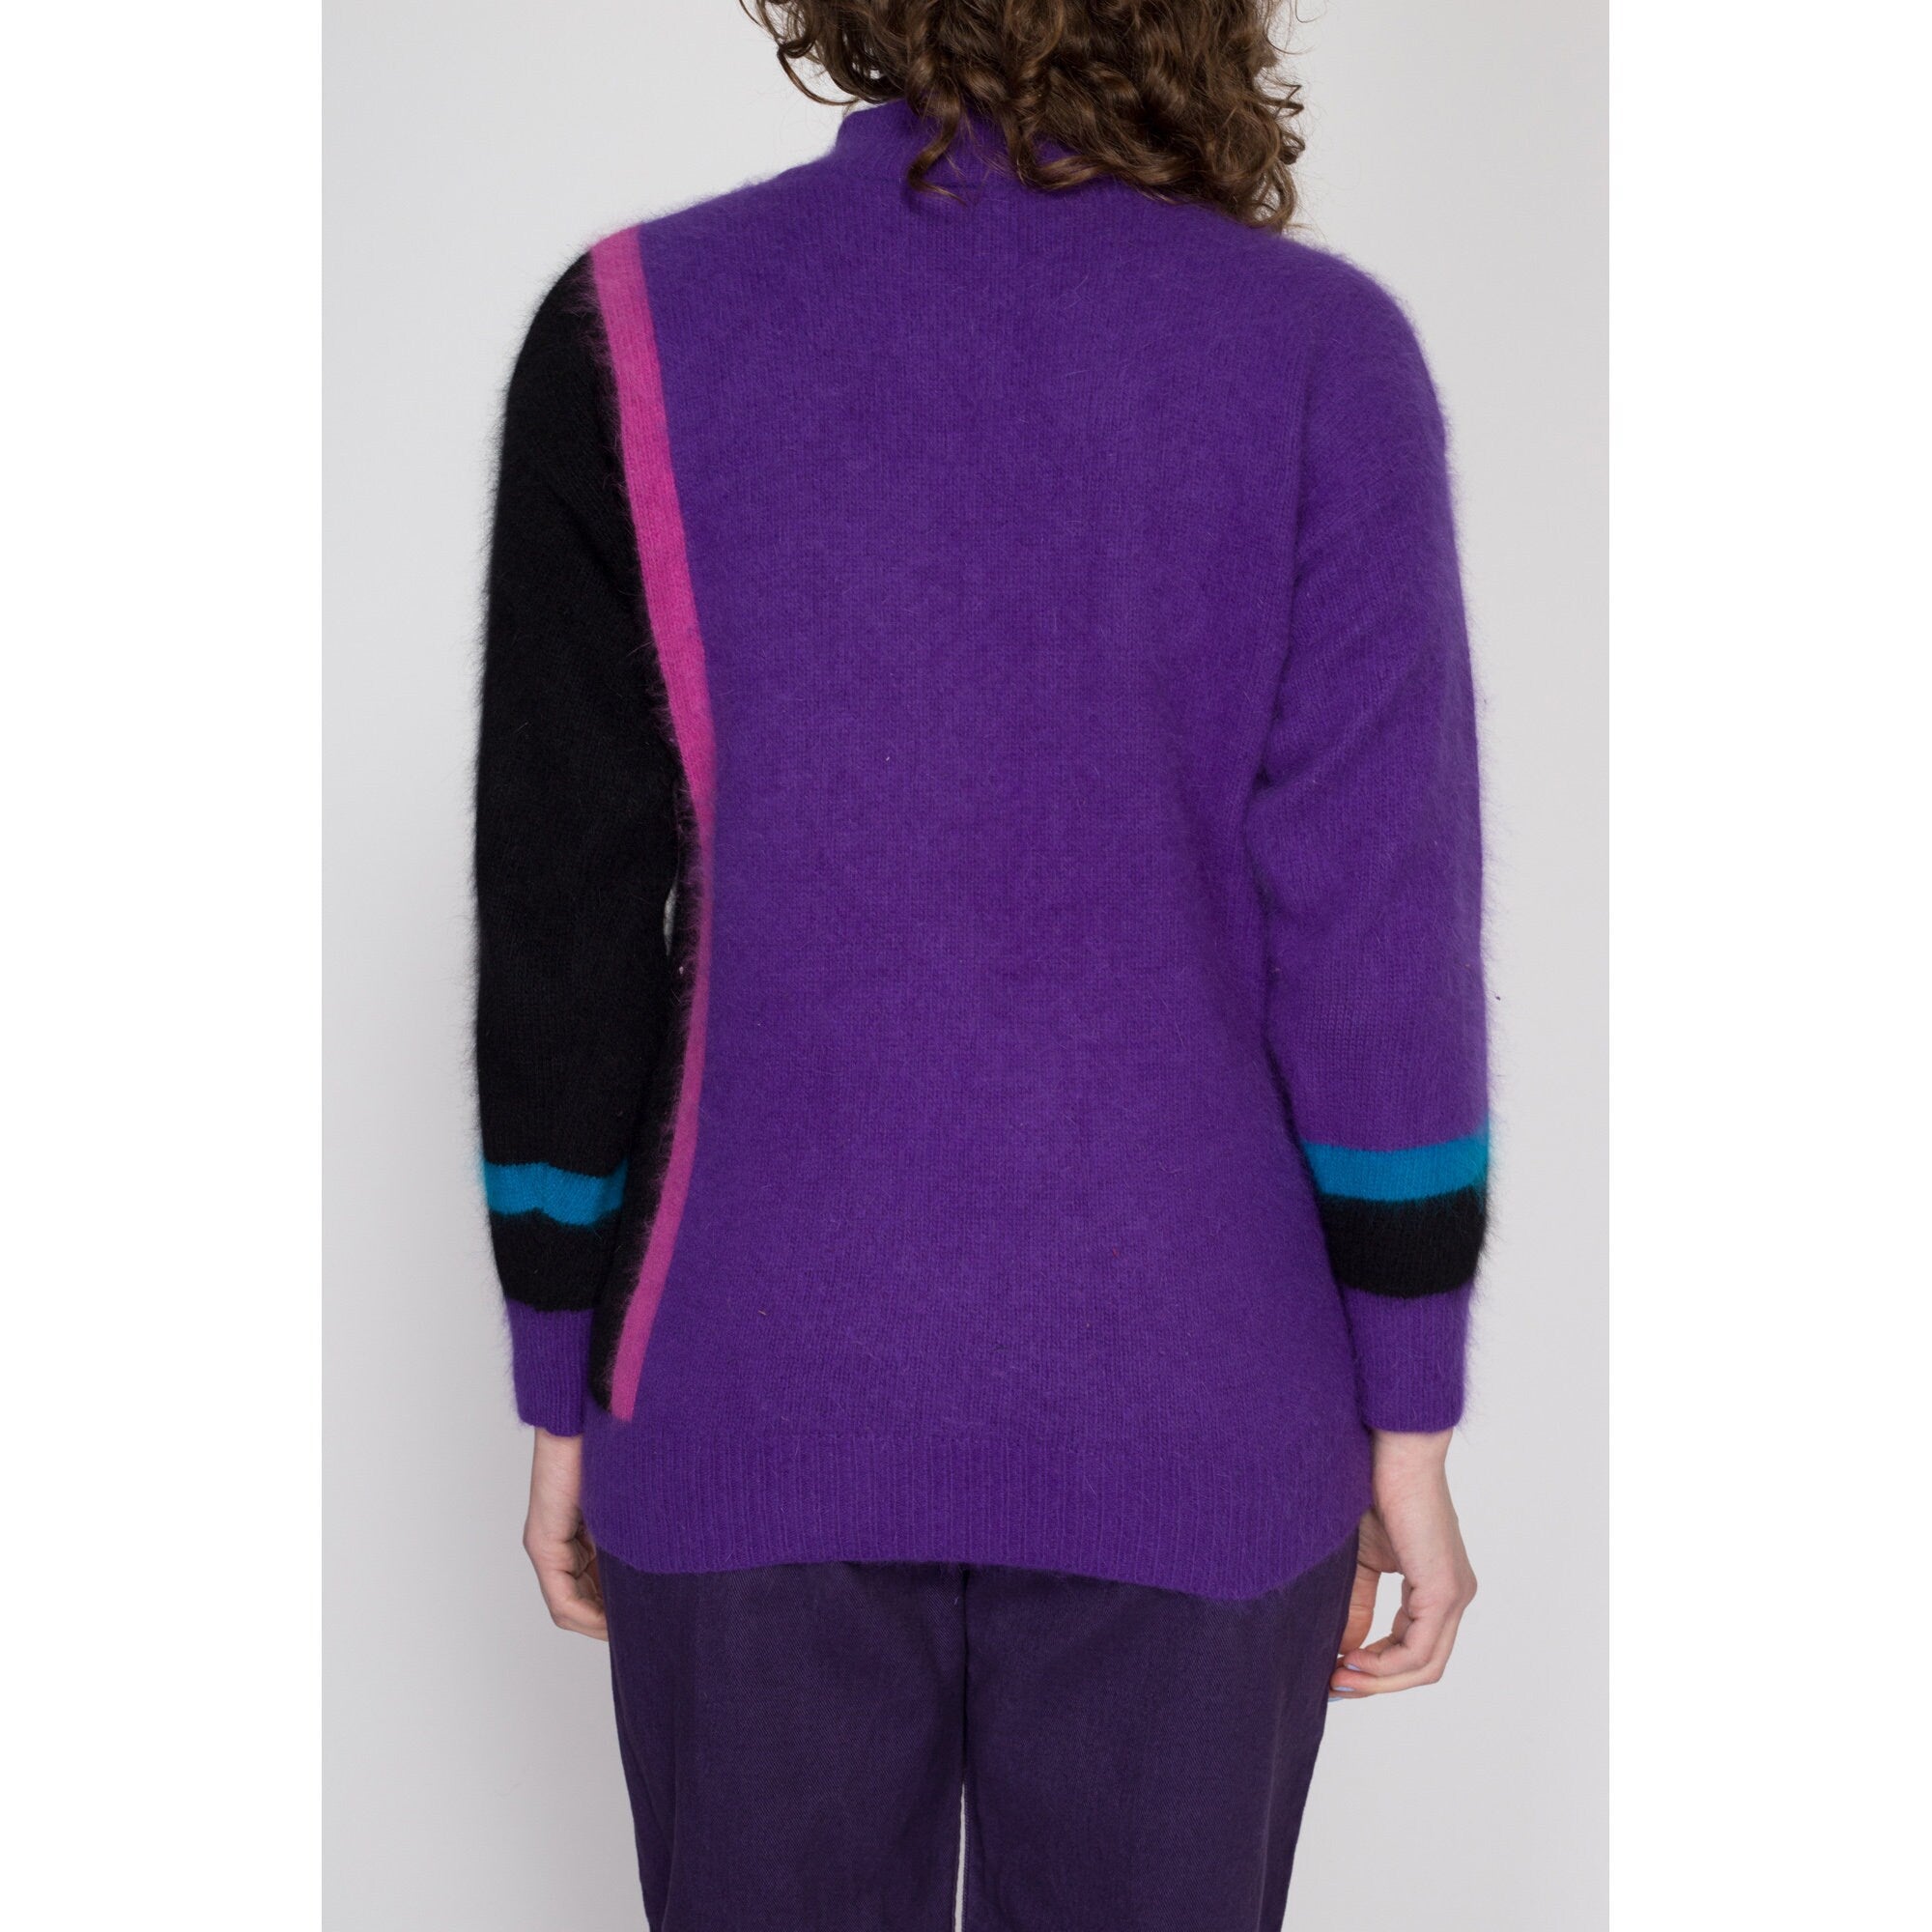 Medium 80s Purple Angora Color Block Sweater